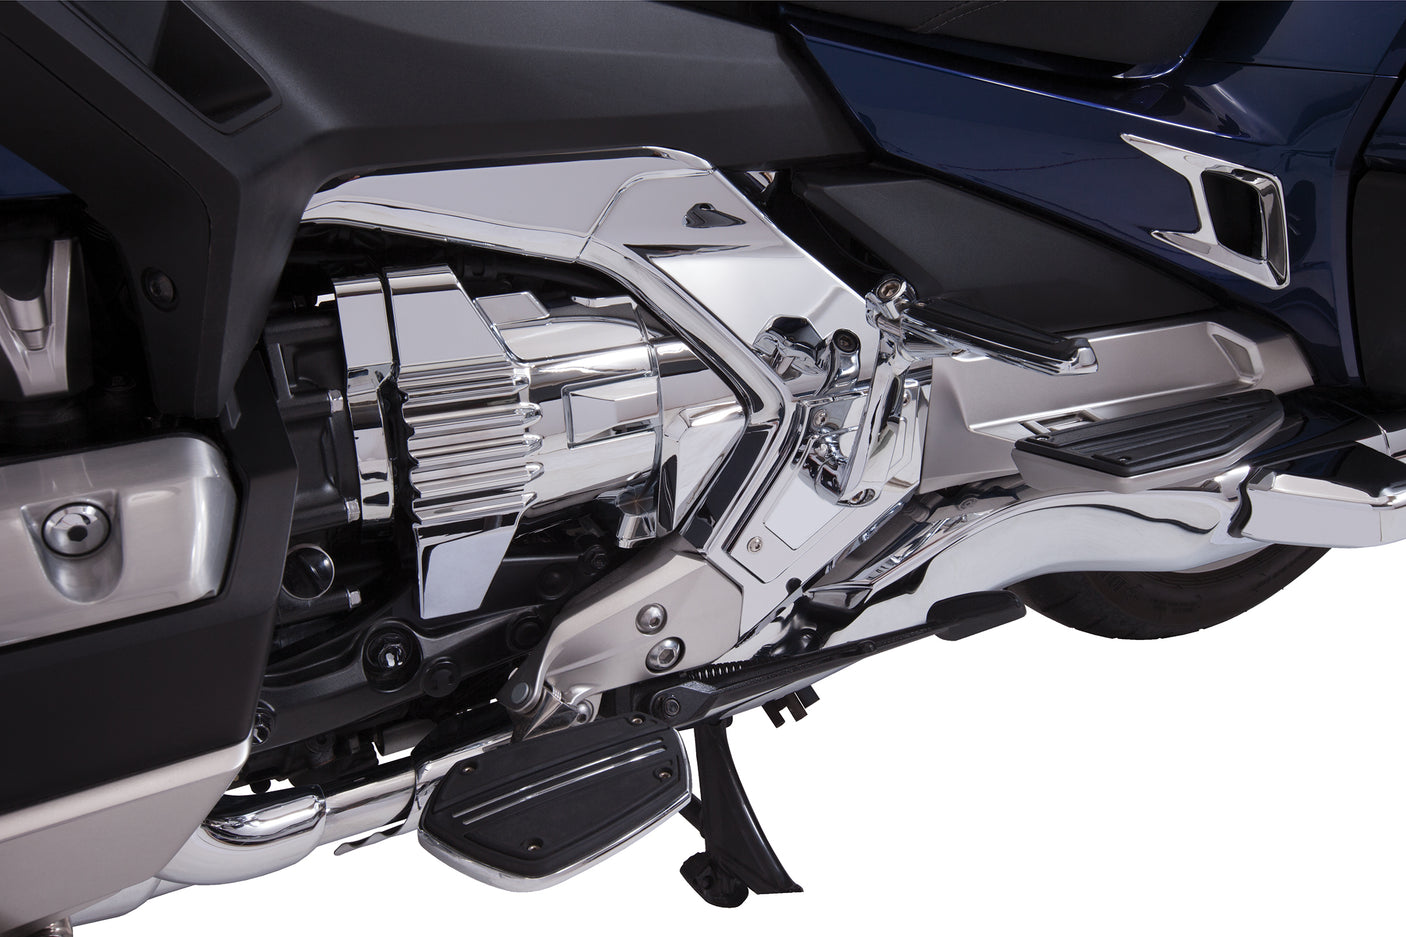 Goldstrike Chrome Engine Cover Set for Honda Gold Wing DCT Models